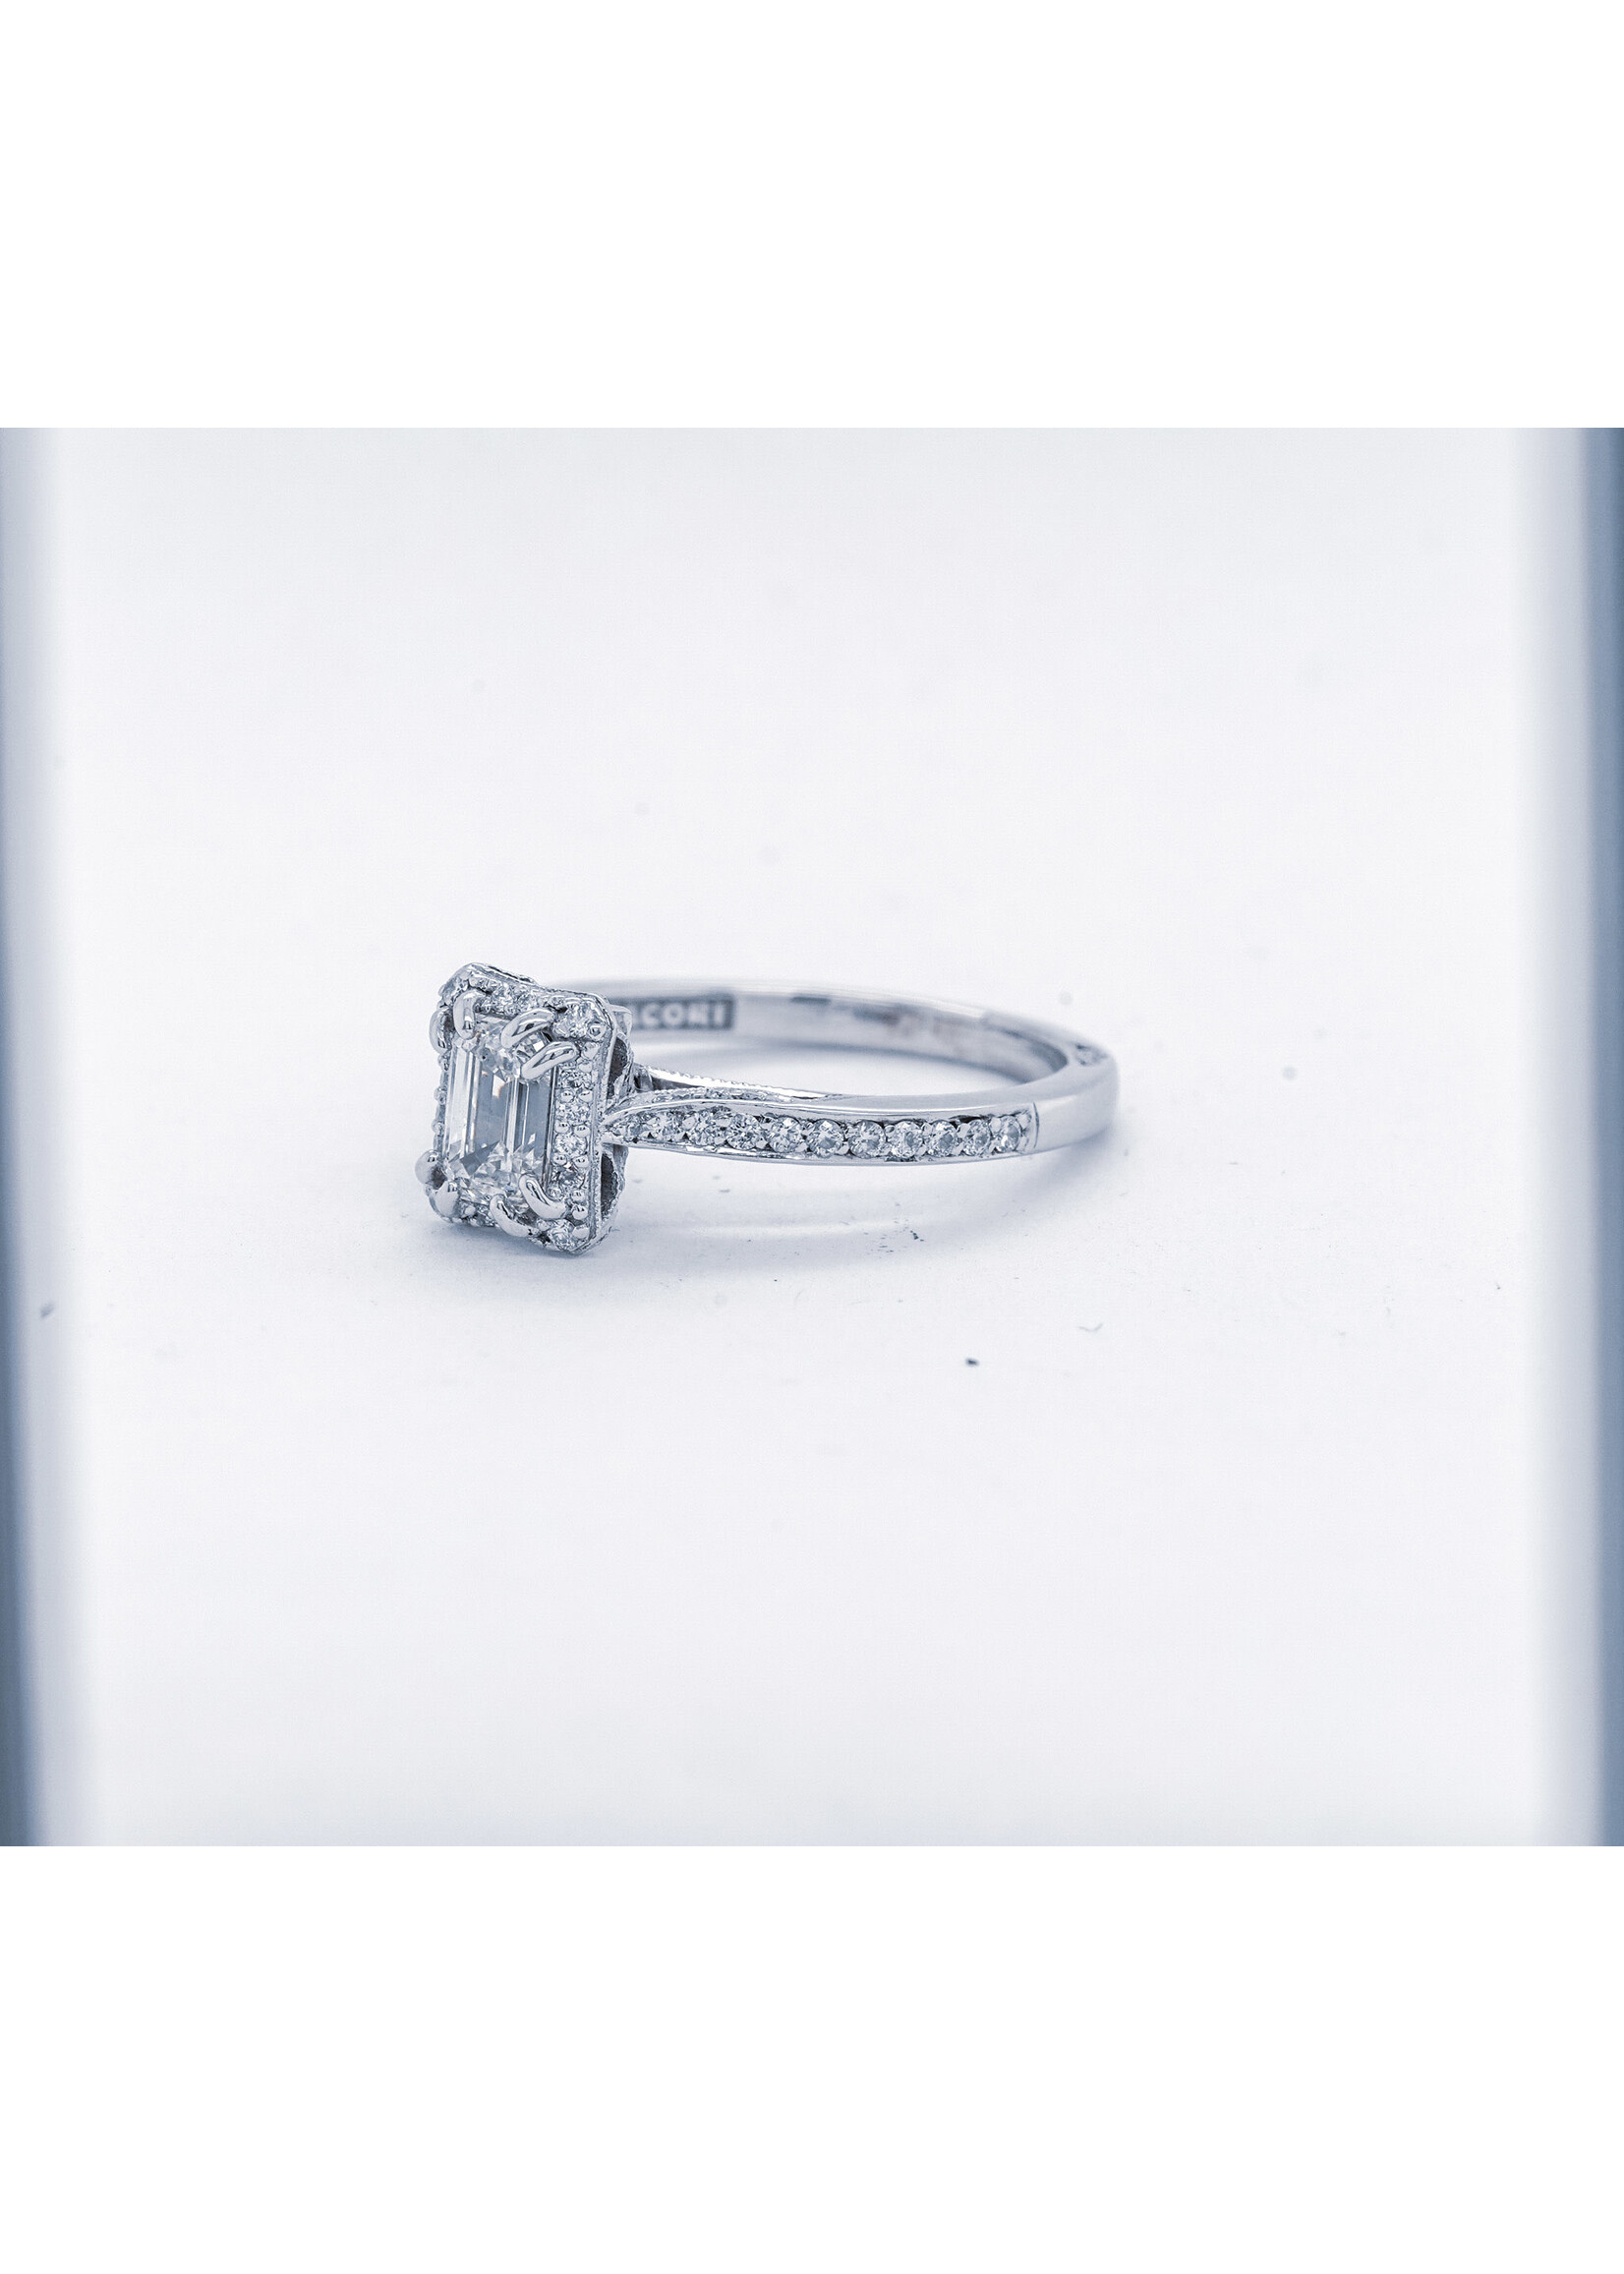 18KW 4.2g 1.10ctw (.72ctr) H/VS2 Emerald Cut Tacori Diamond Engagement Ring (size 6.5)